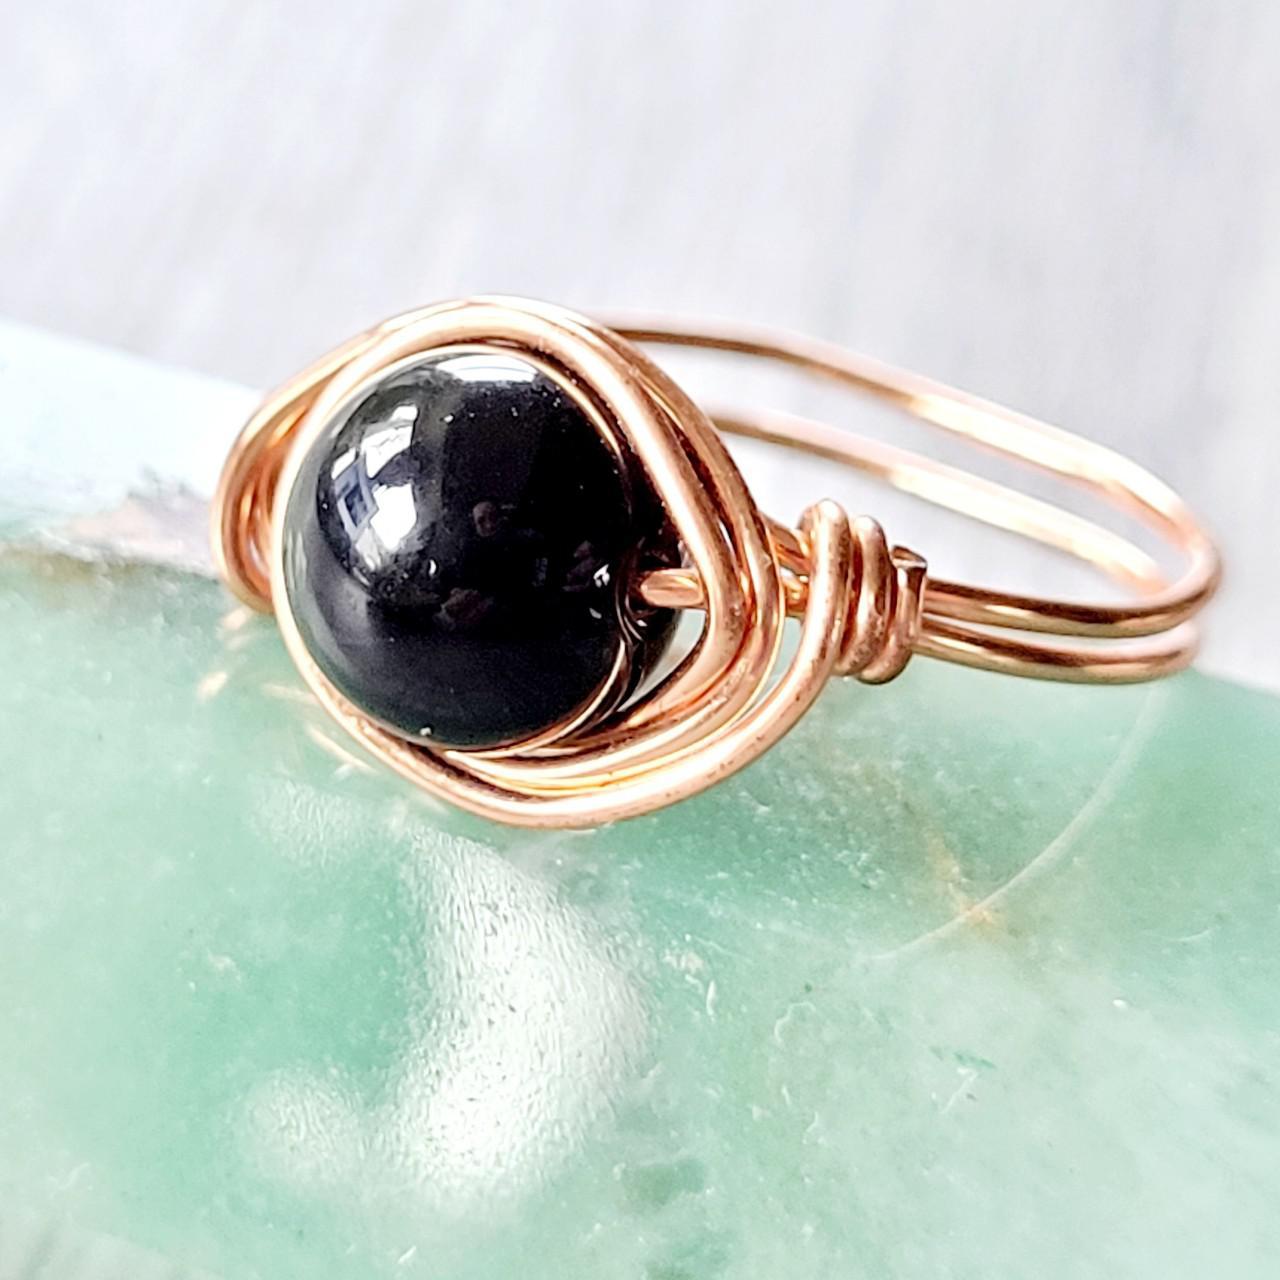 Product Image 1 - Crystal ring.
Genuine polished Rainbow Obsidian